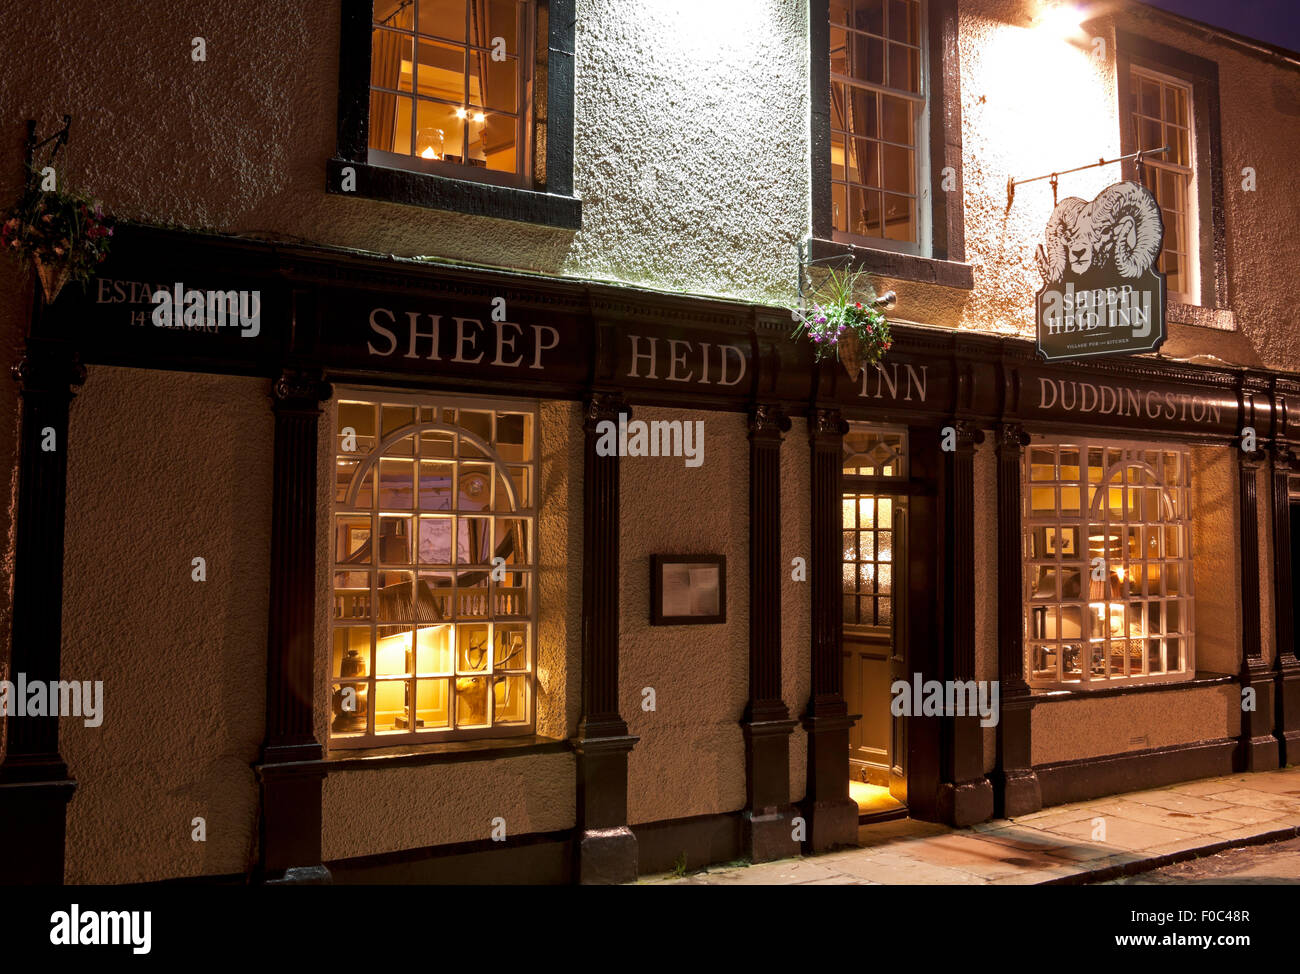 Sheep Heid Inn, Duddingston Edinburgh, Scotland UK Stock Photo